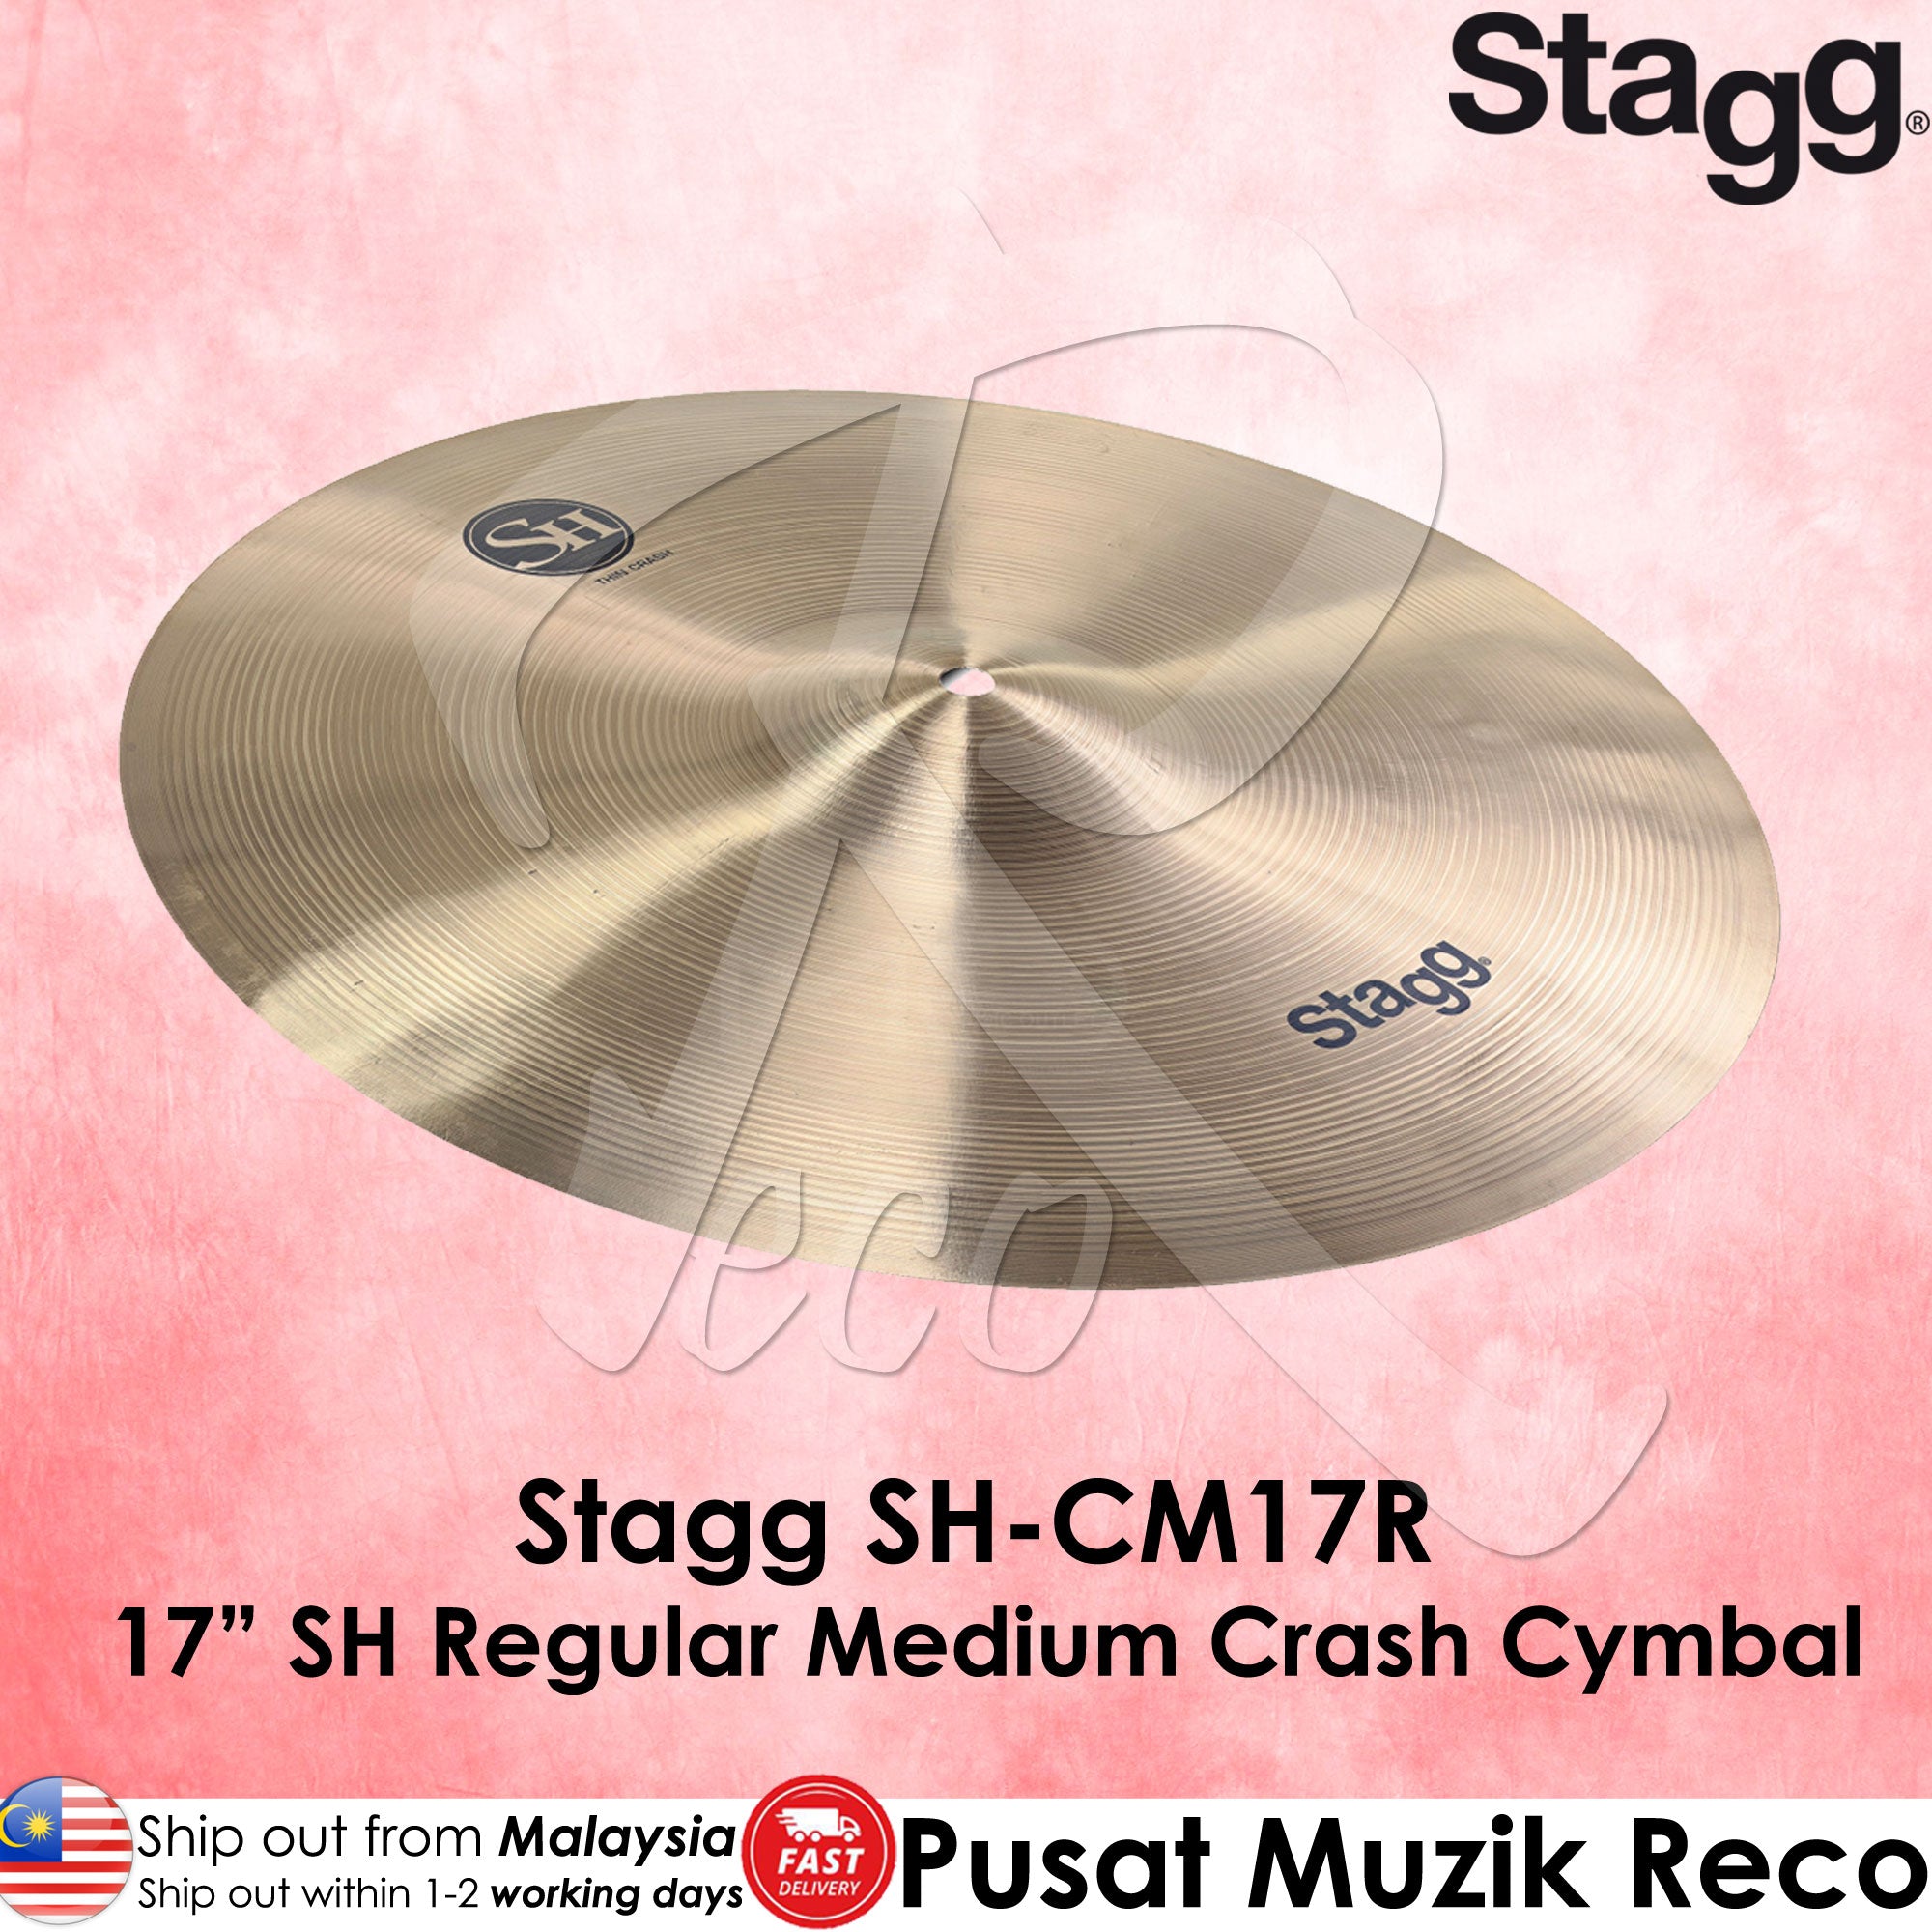 Stagg SH-CM17R 17